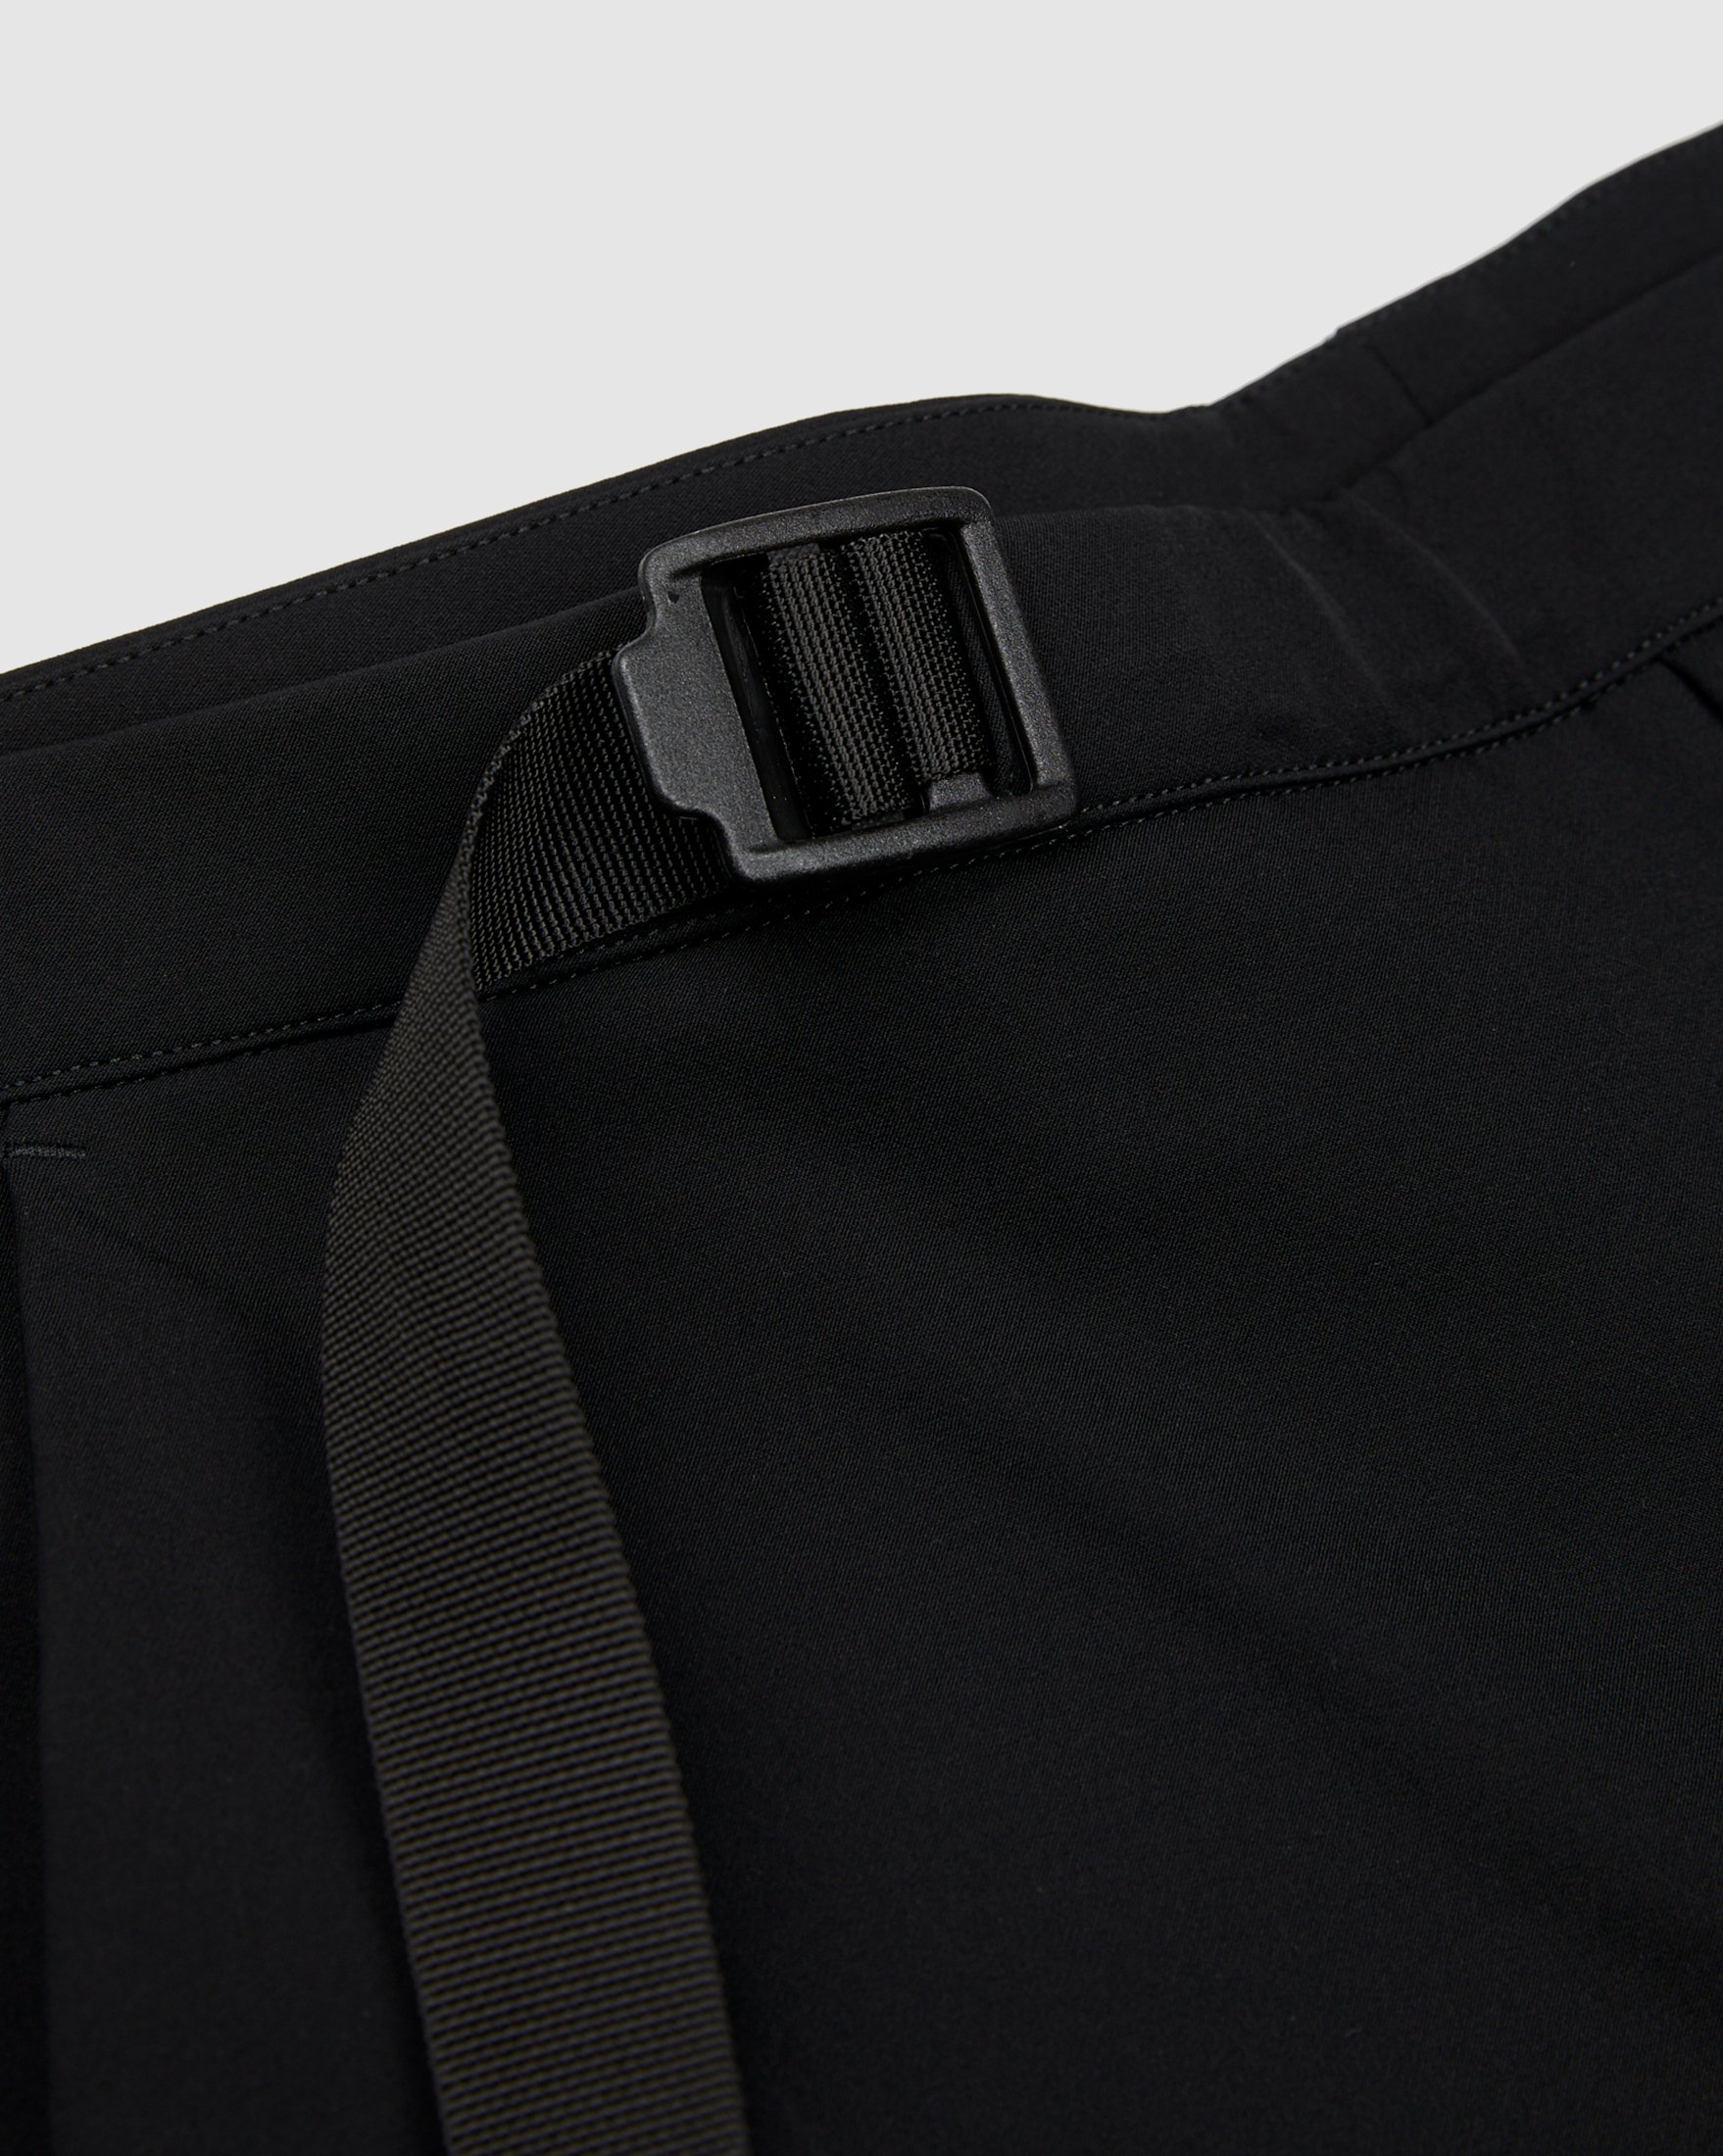 ACRONYM - P31A DS Trouser Black - Clothing - Black - Image 4